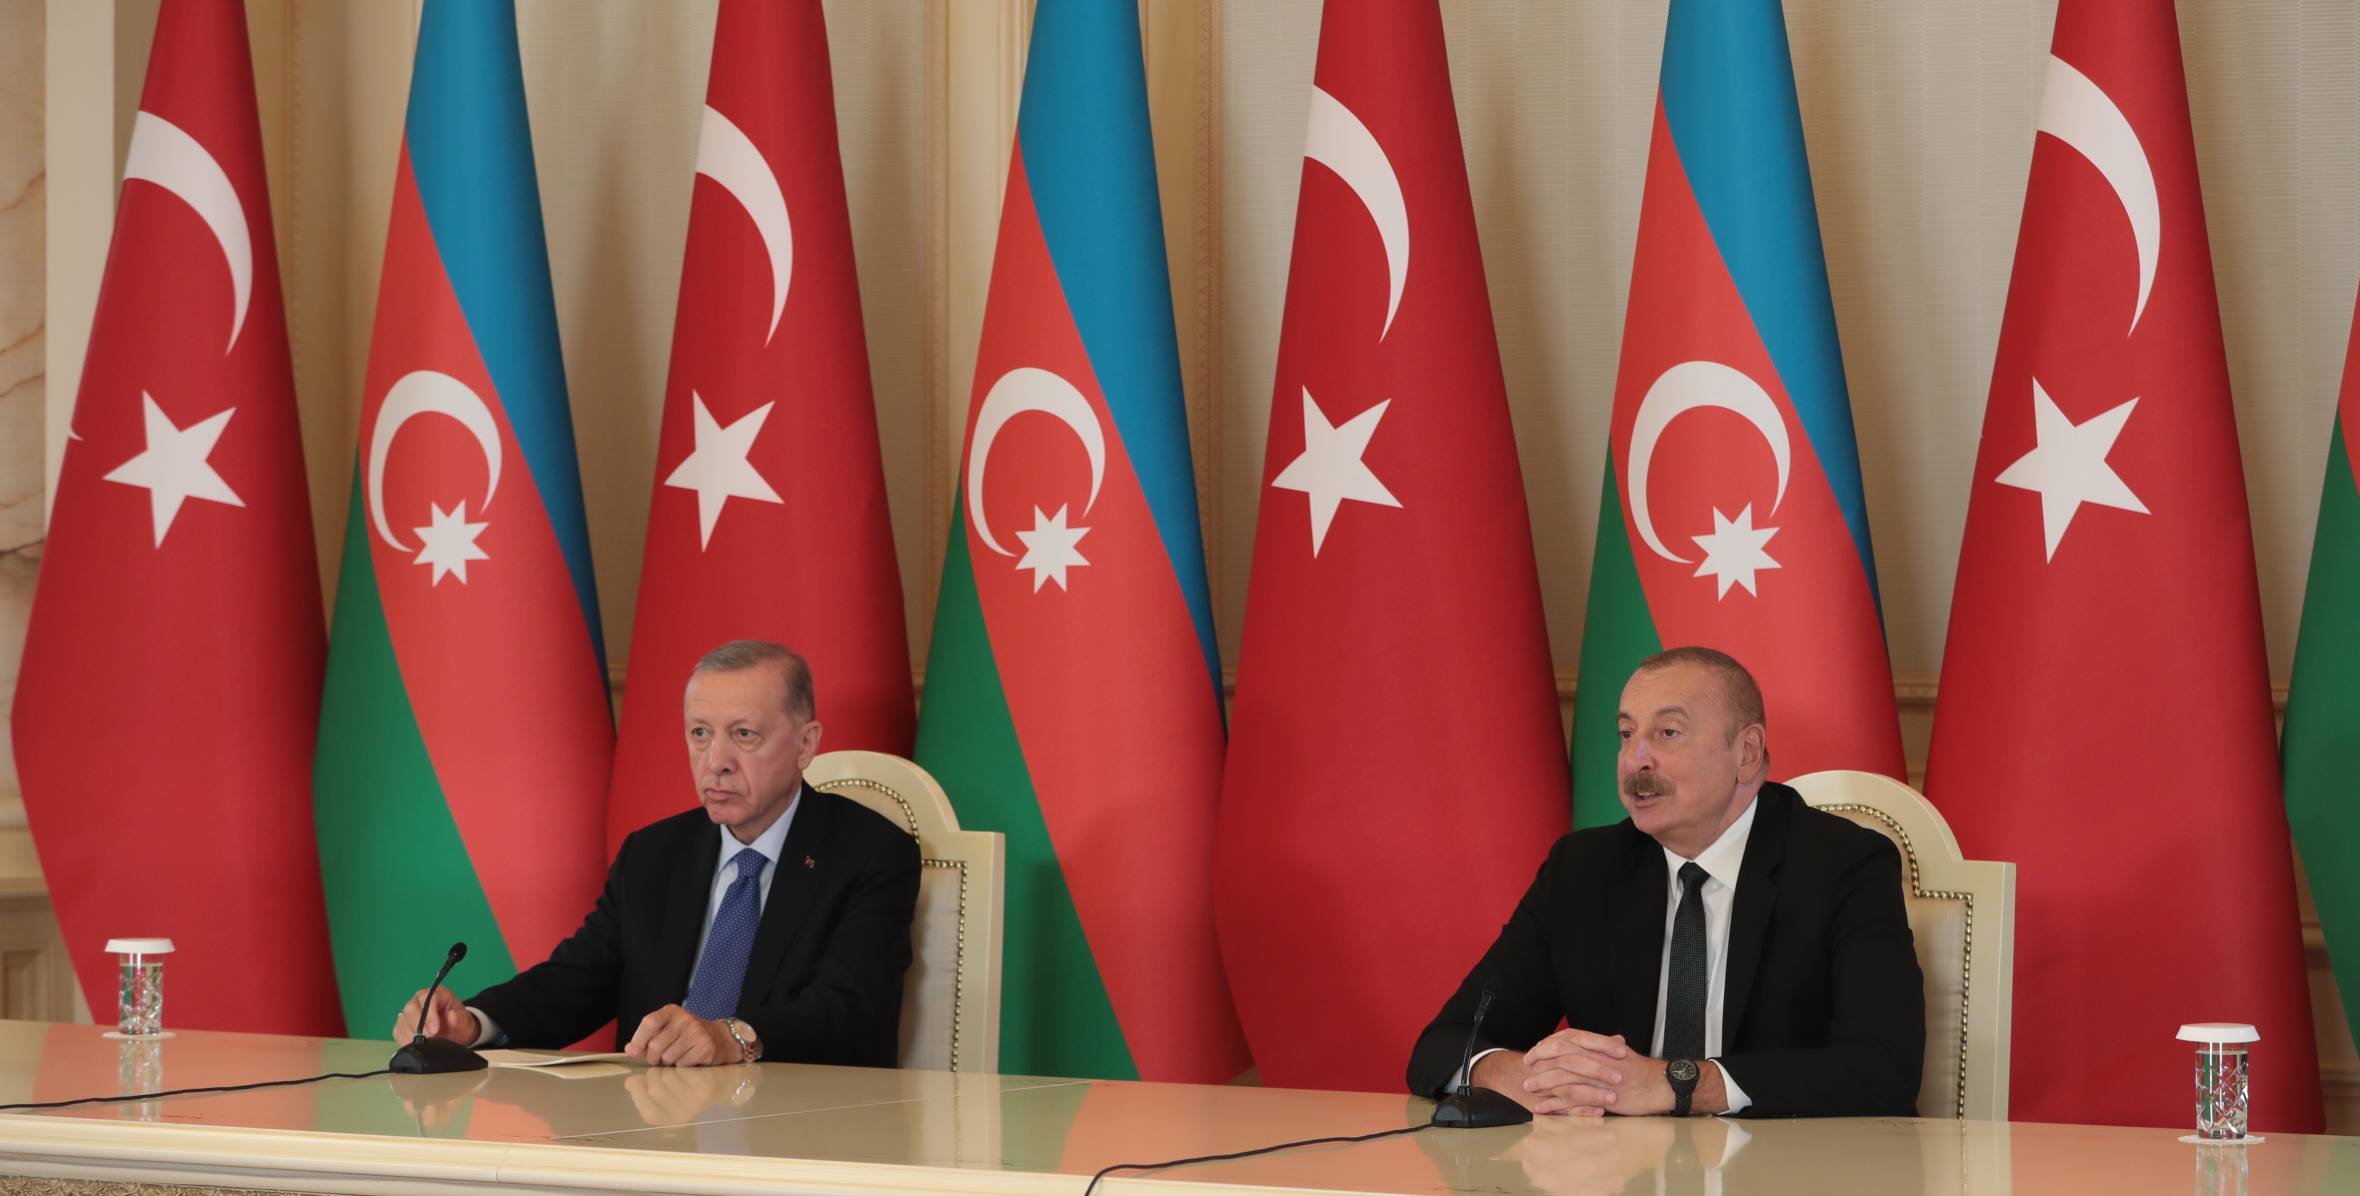 Azerbaijani and Turkish Presidents are making press statements